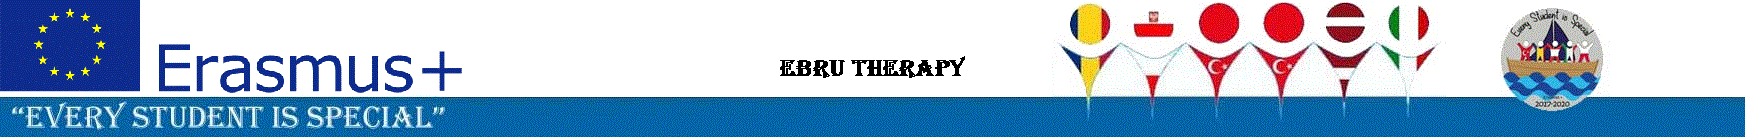 EBRU therapy